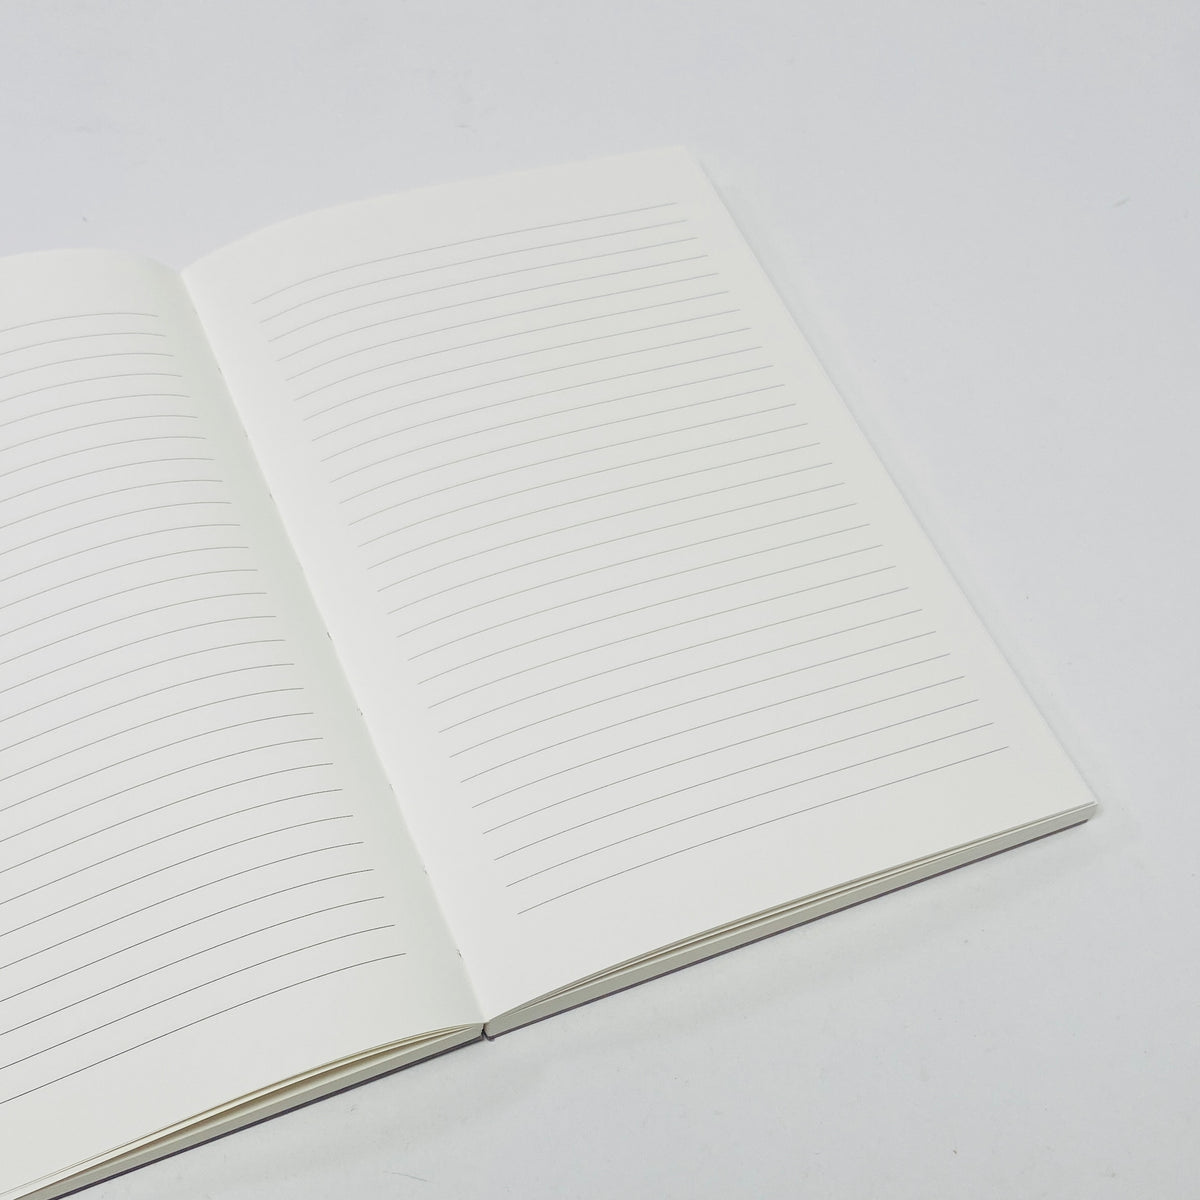 Pith Yuzu Notebook Grey - Lined